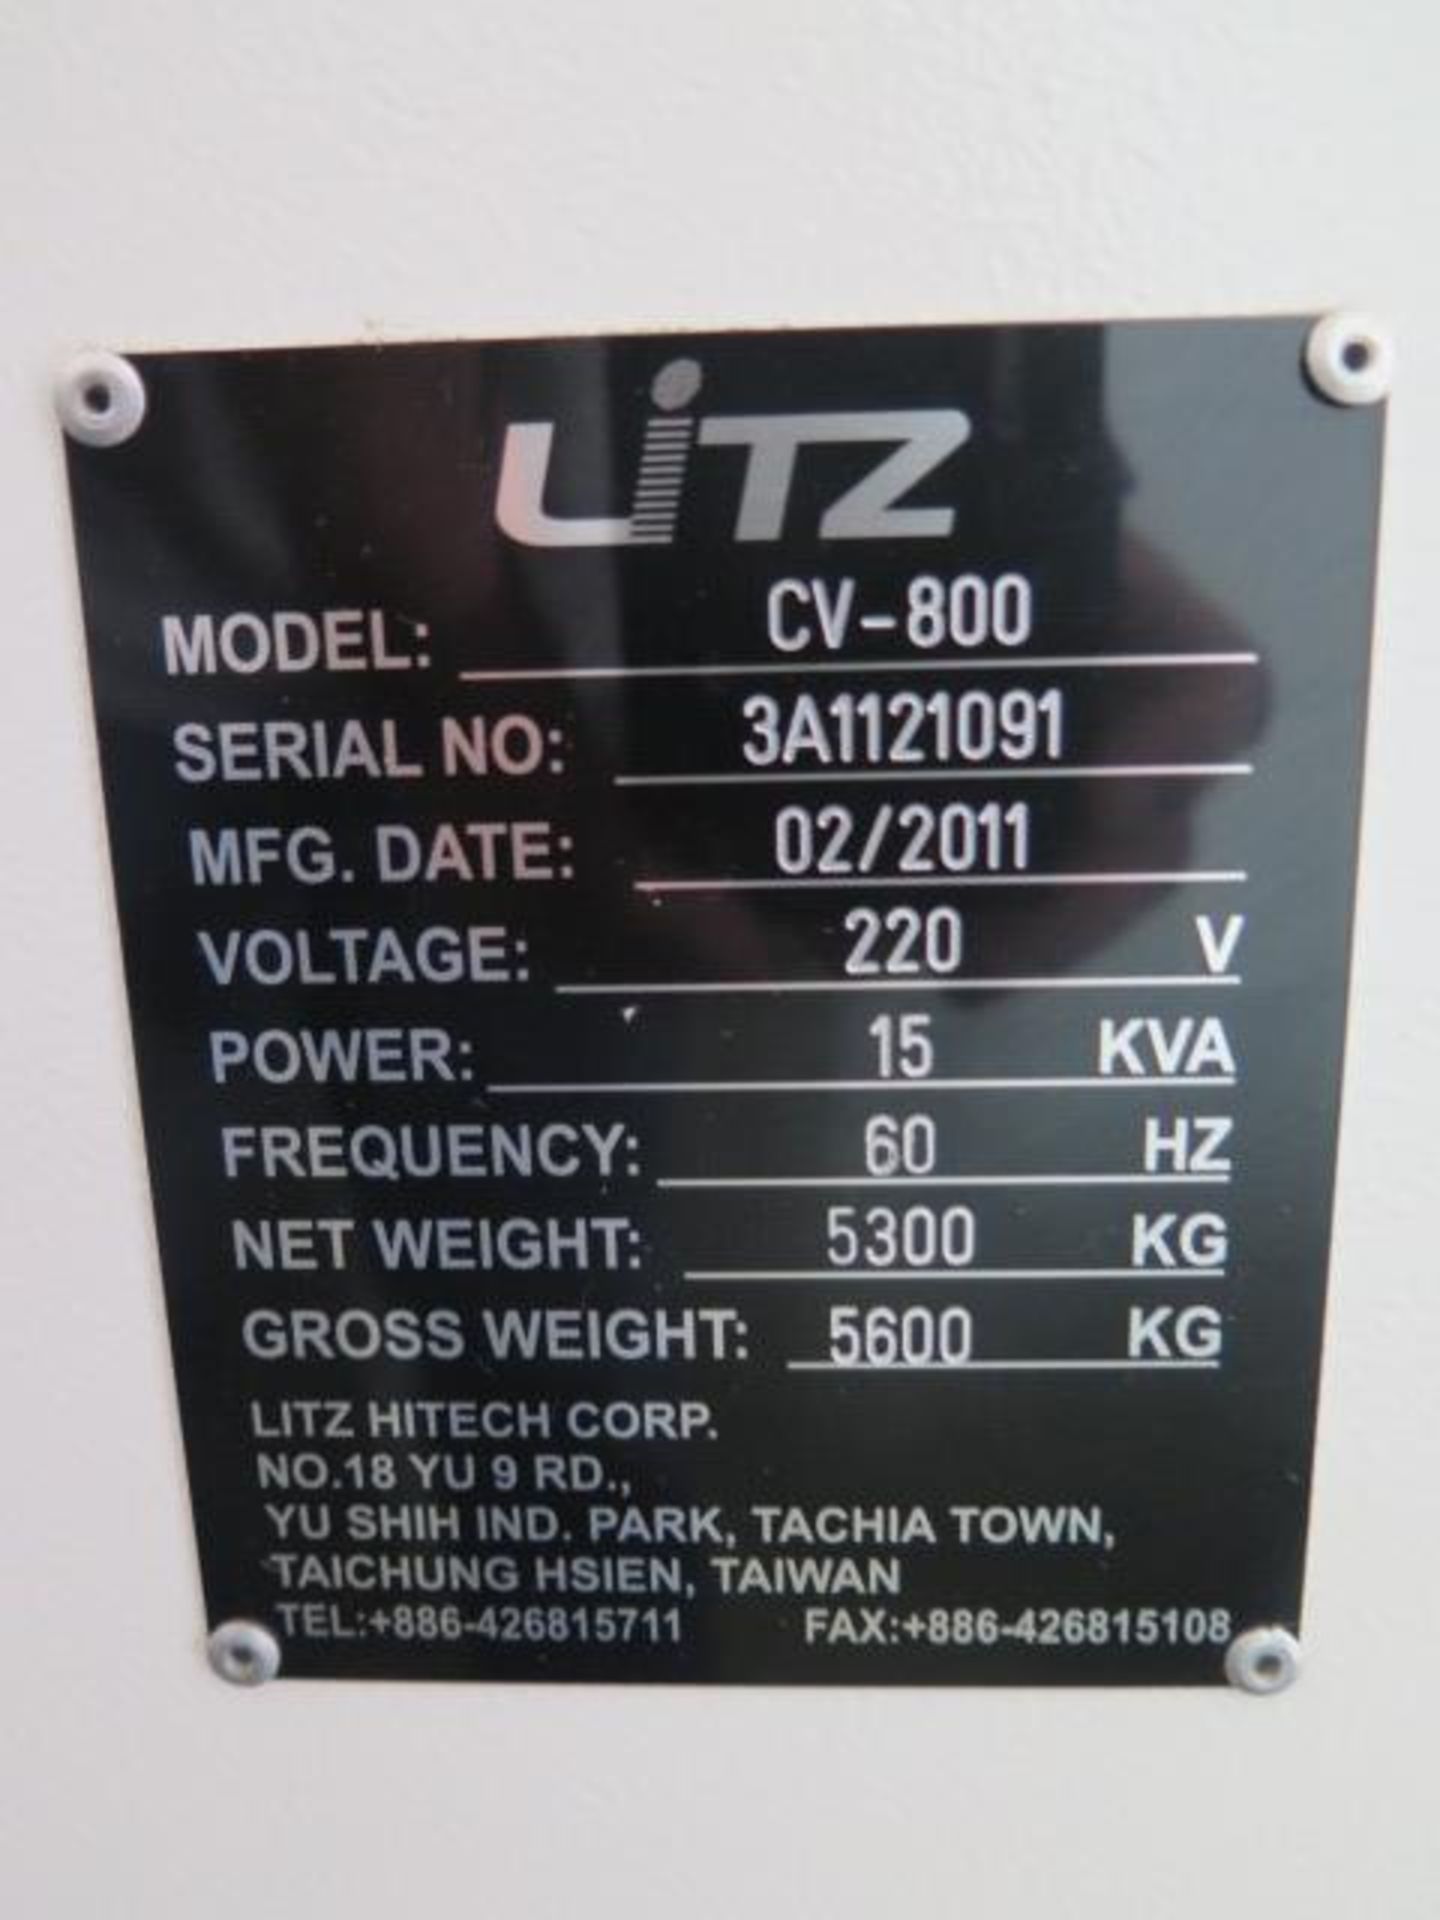 2011 Litz Hitech CV-800 4-Axis CNC Vertical Machining Center s/n 3A1121091 w/ Fanuc Series 18i-MB - Image 20 of 20